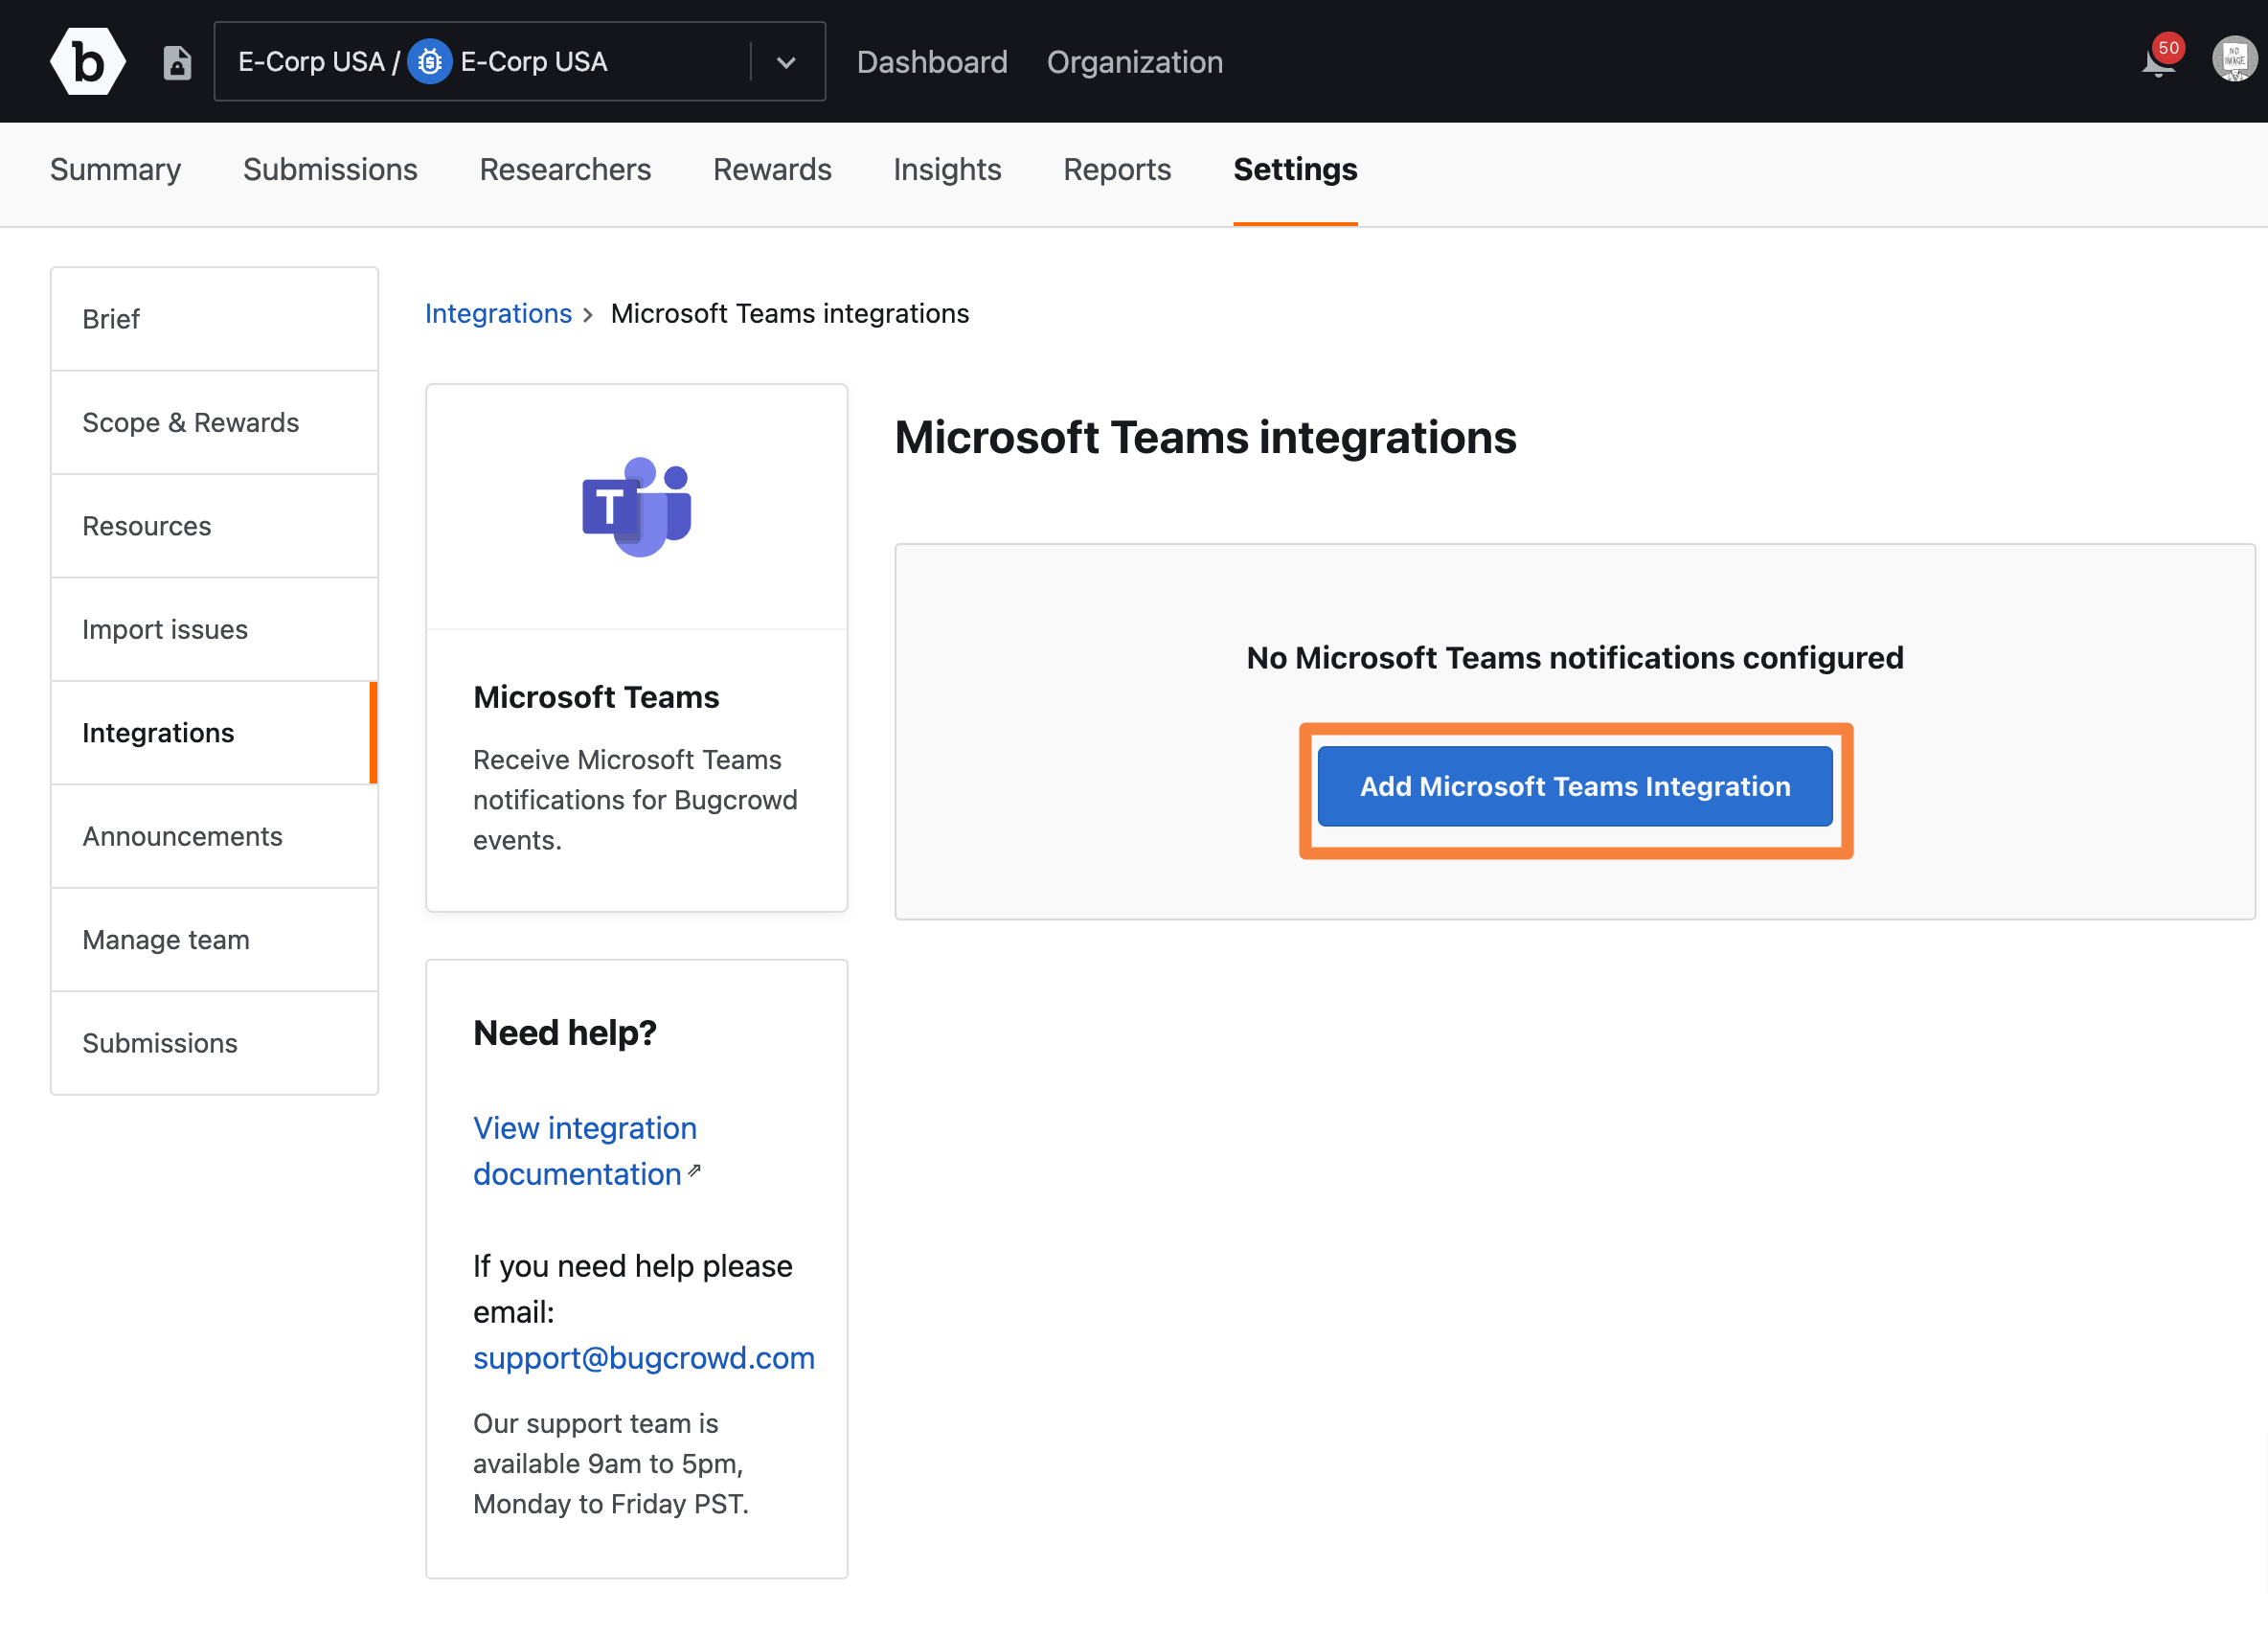 Click Add Microsoft Teams Integration